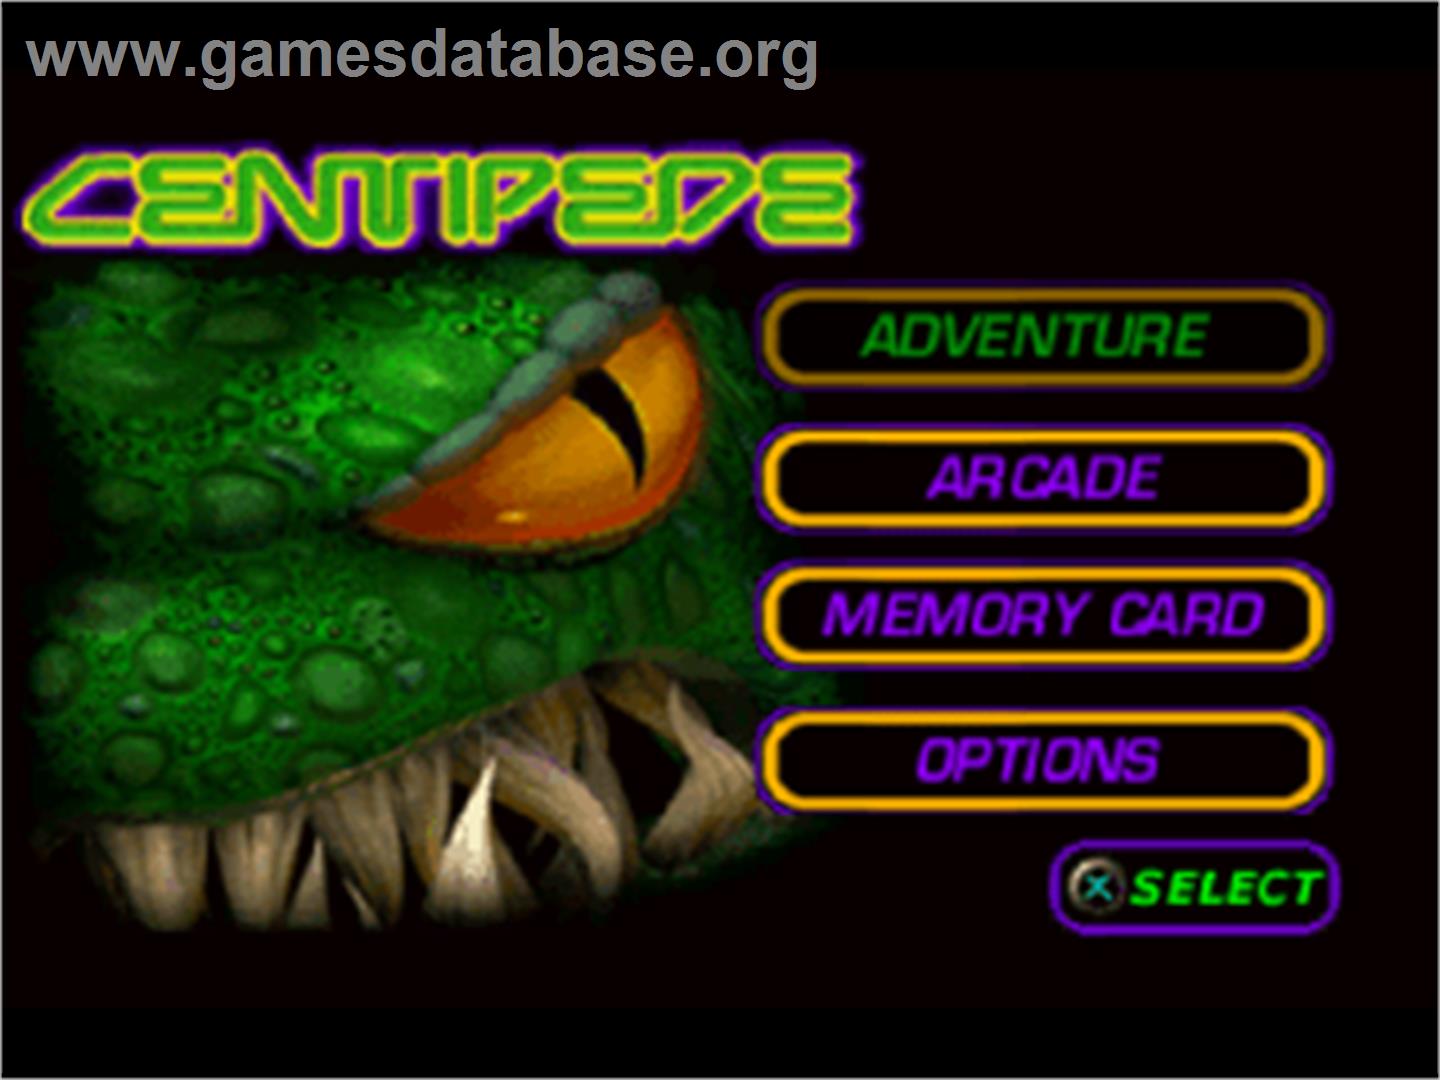 Centipede - Sony Playstation - Artwork - Title Screen